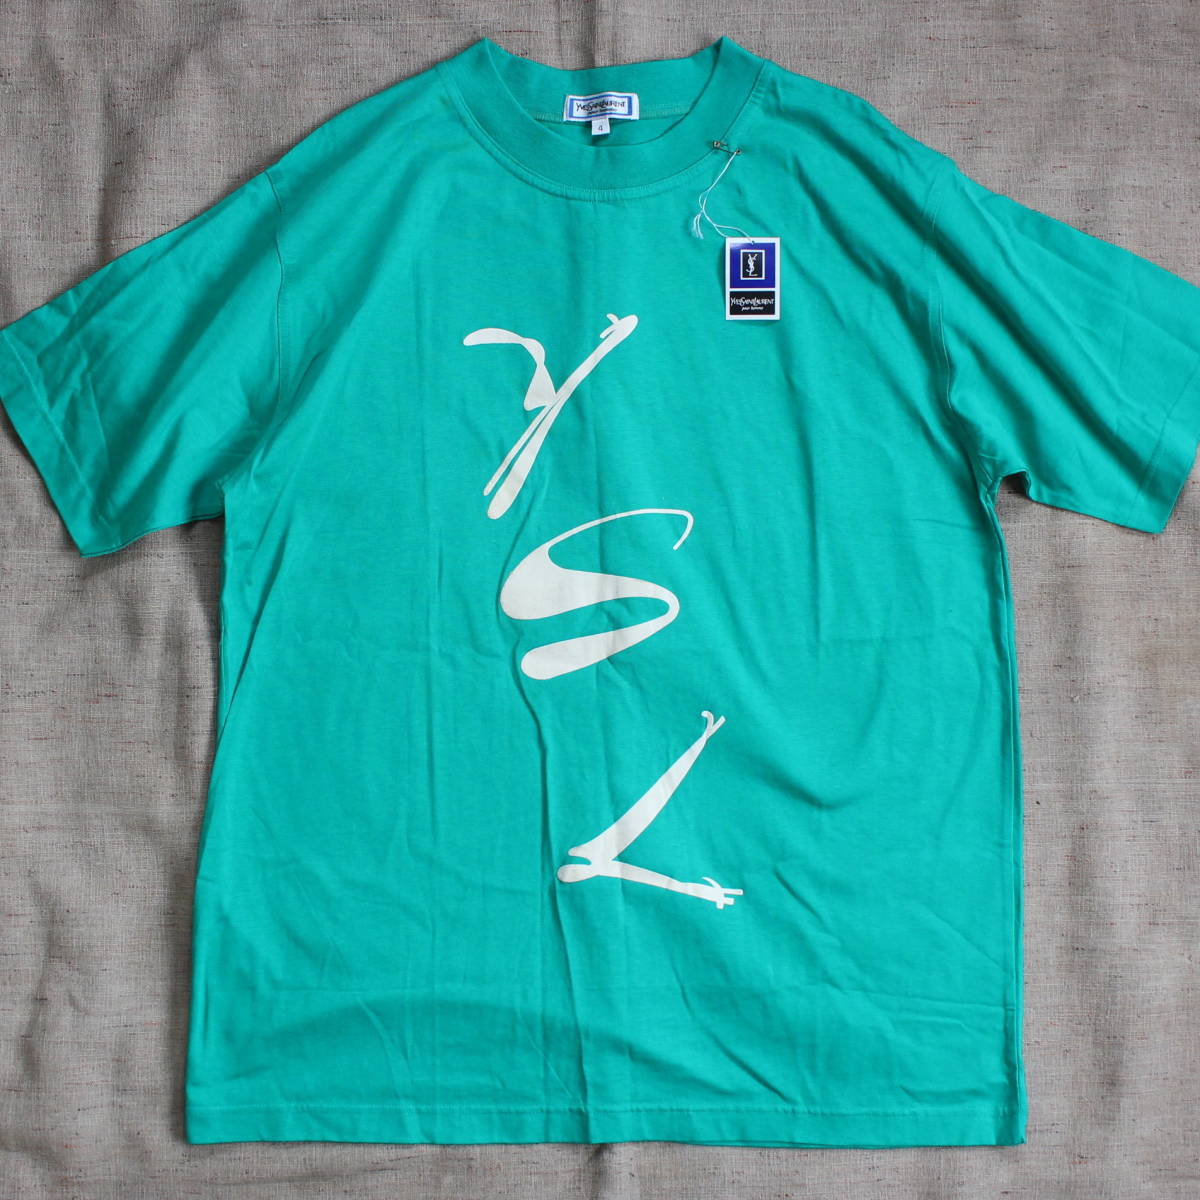  rare 1980-90s tag equipped YVES SAINT LAURENT Vintage T-shirt art mezzo n green Eve sun rolan ivu Vintage French 